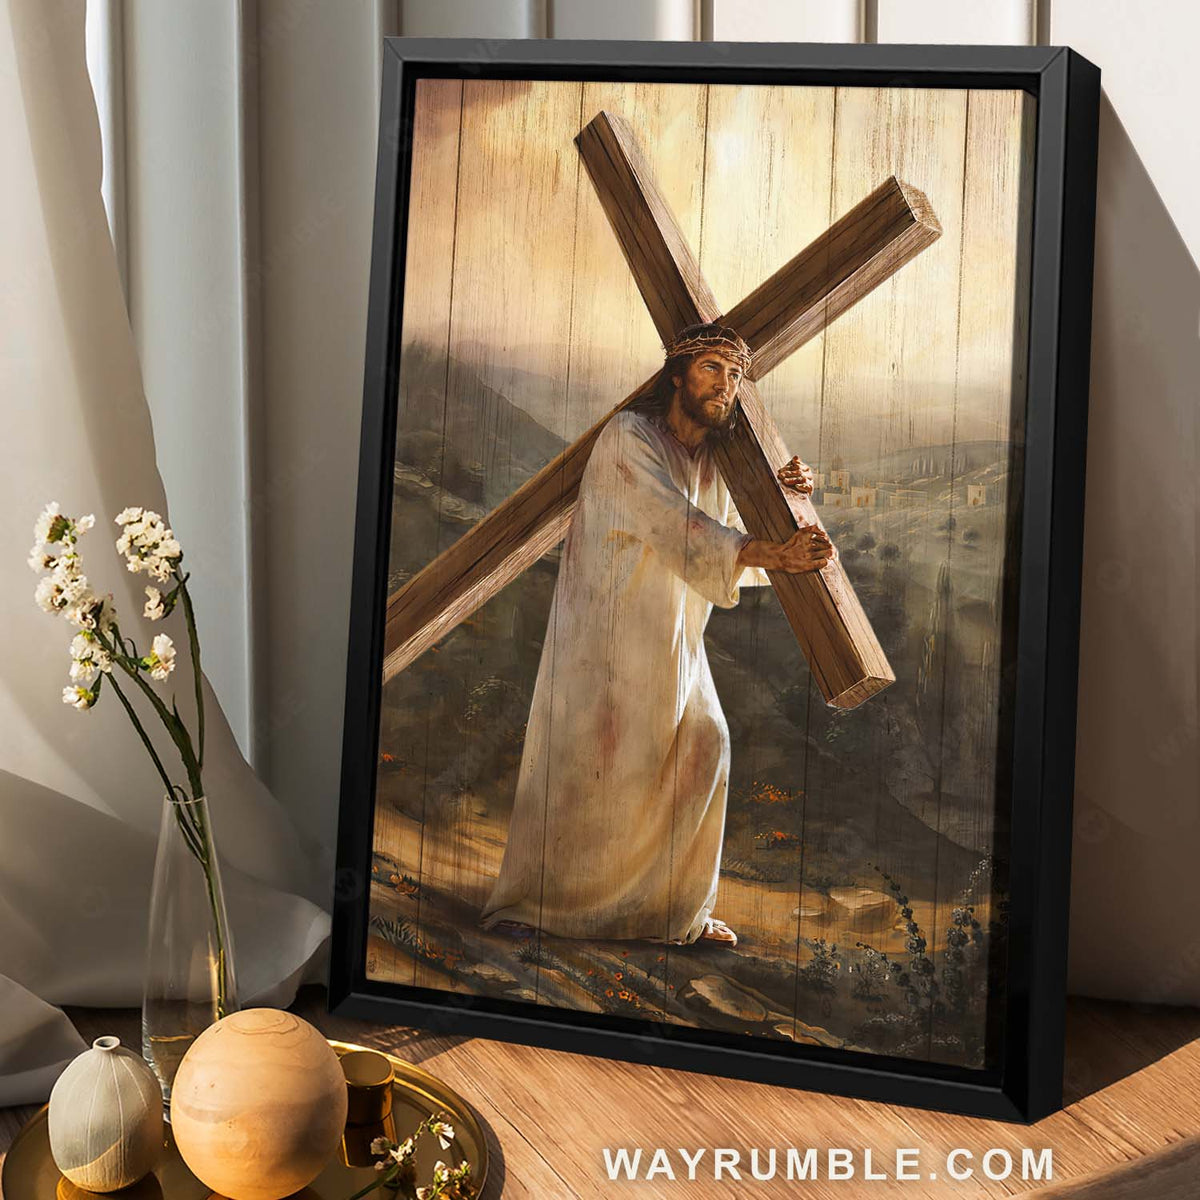 jesus carrying the cross